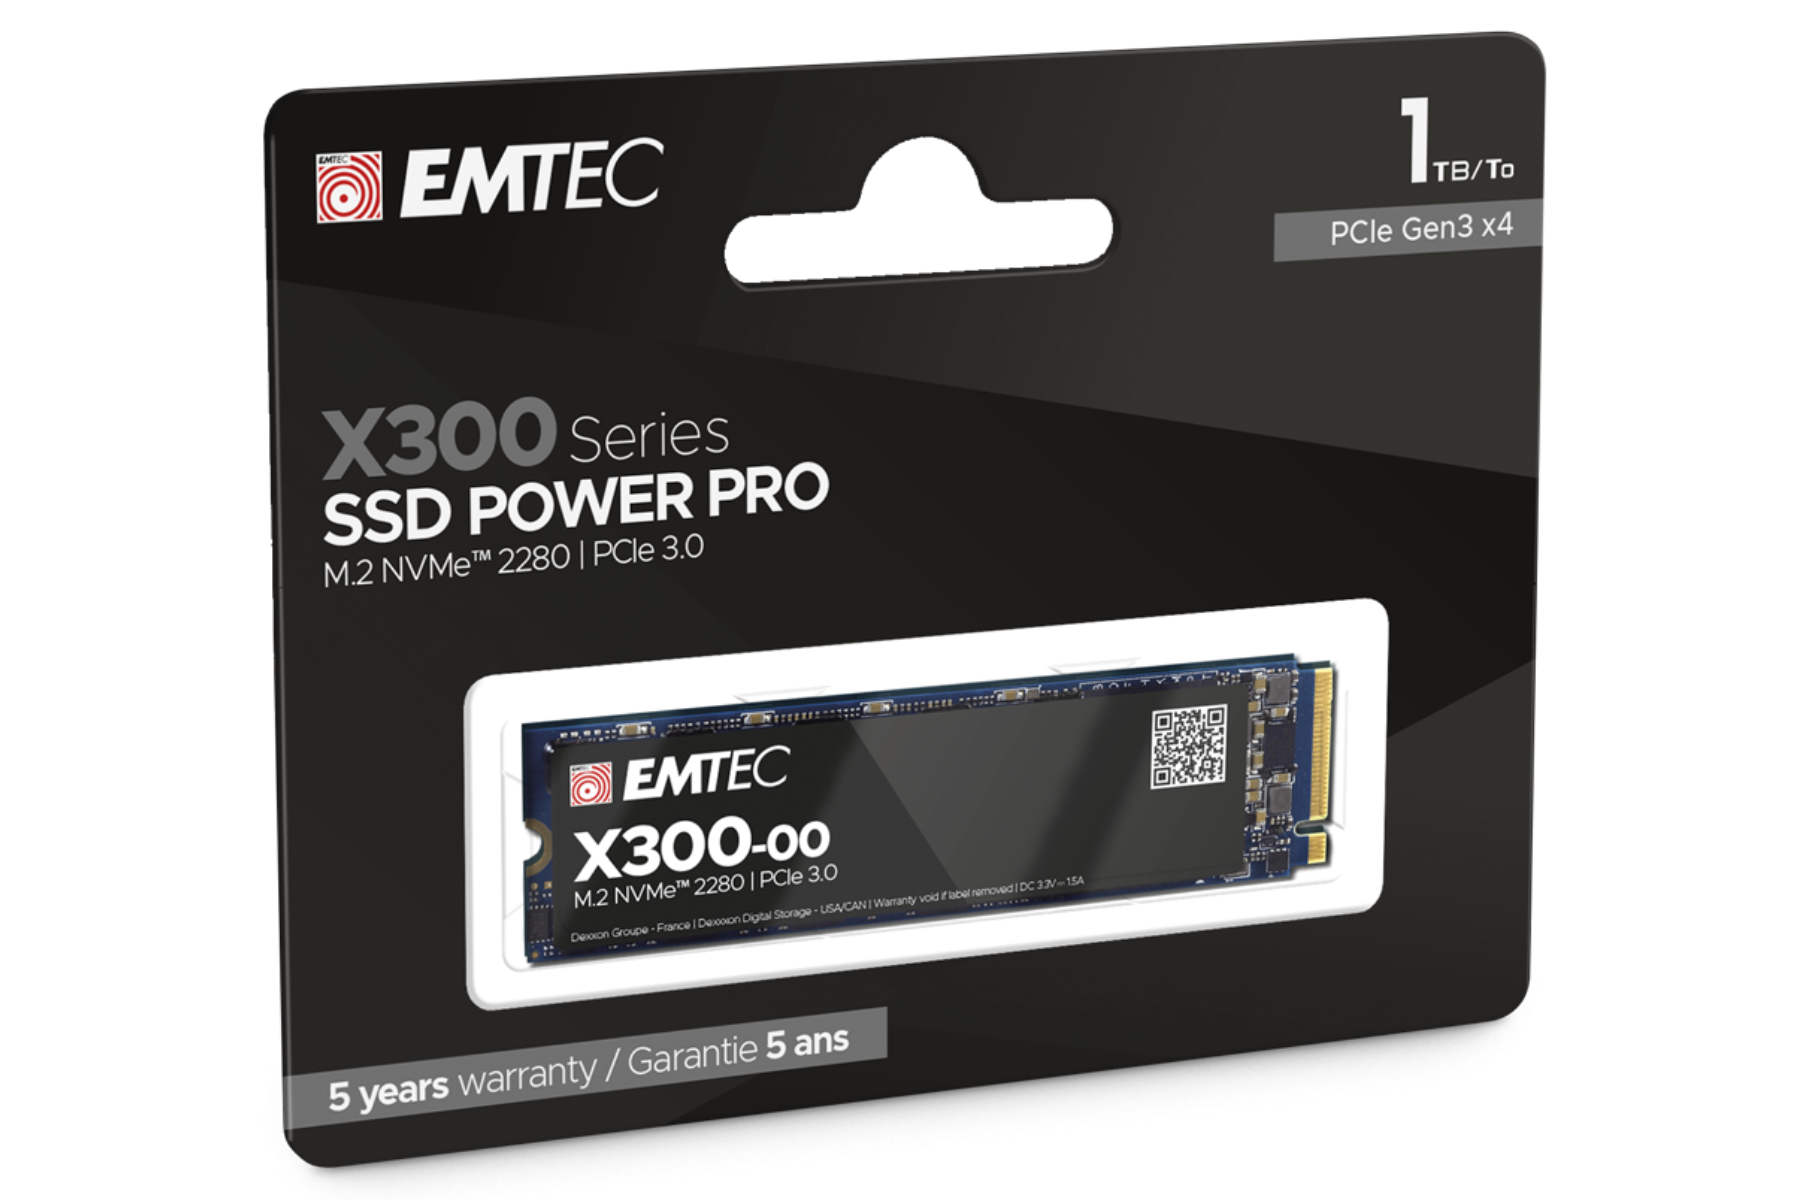 Interný disk Emtec X300 1TB SSD disk uvod